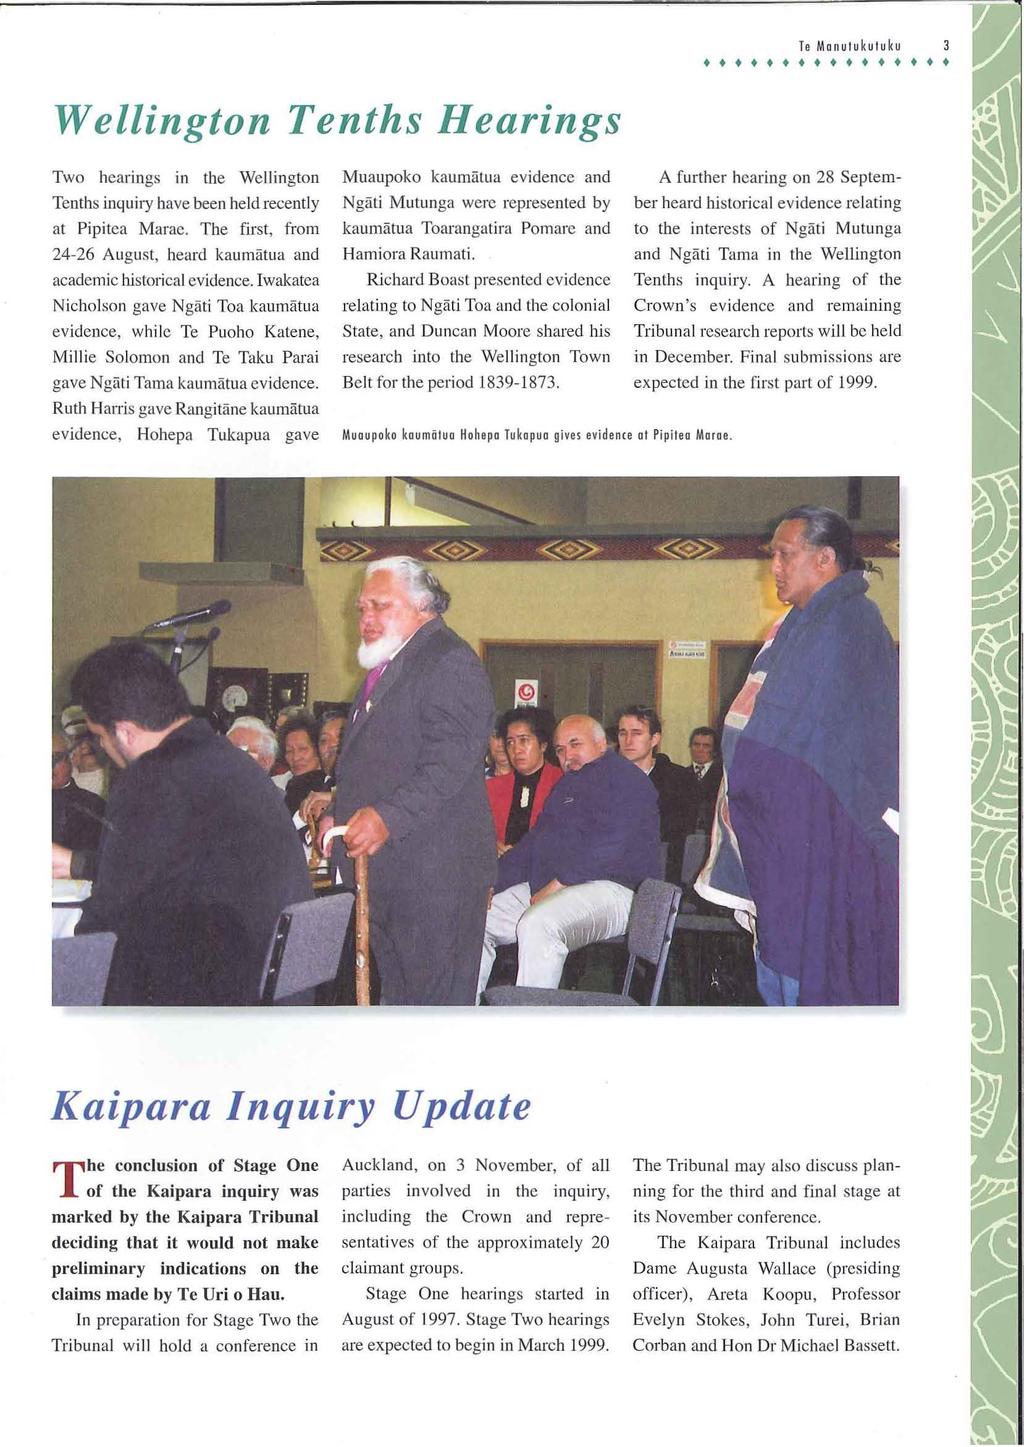 le Monulukutuku Wellington Tenths Hearings Two hearings in the Wellington Tenths inquiry have been held recently at Pipitea Marae.